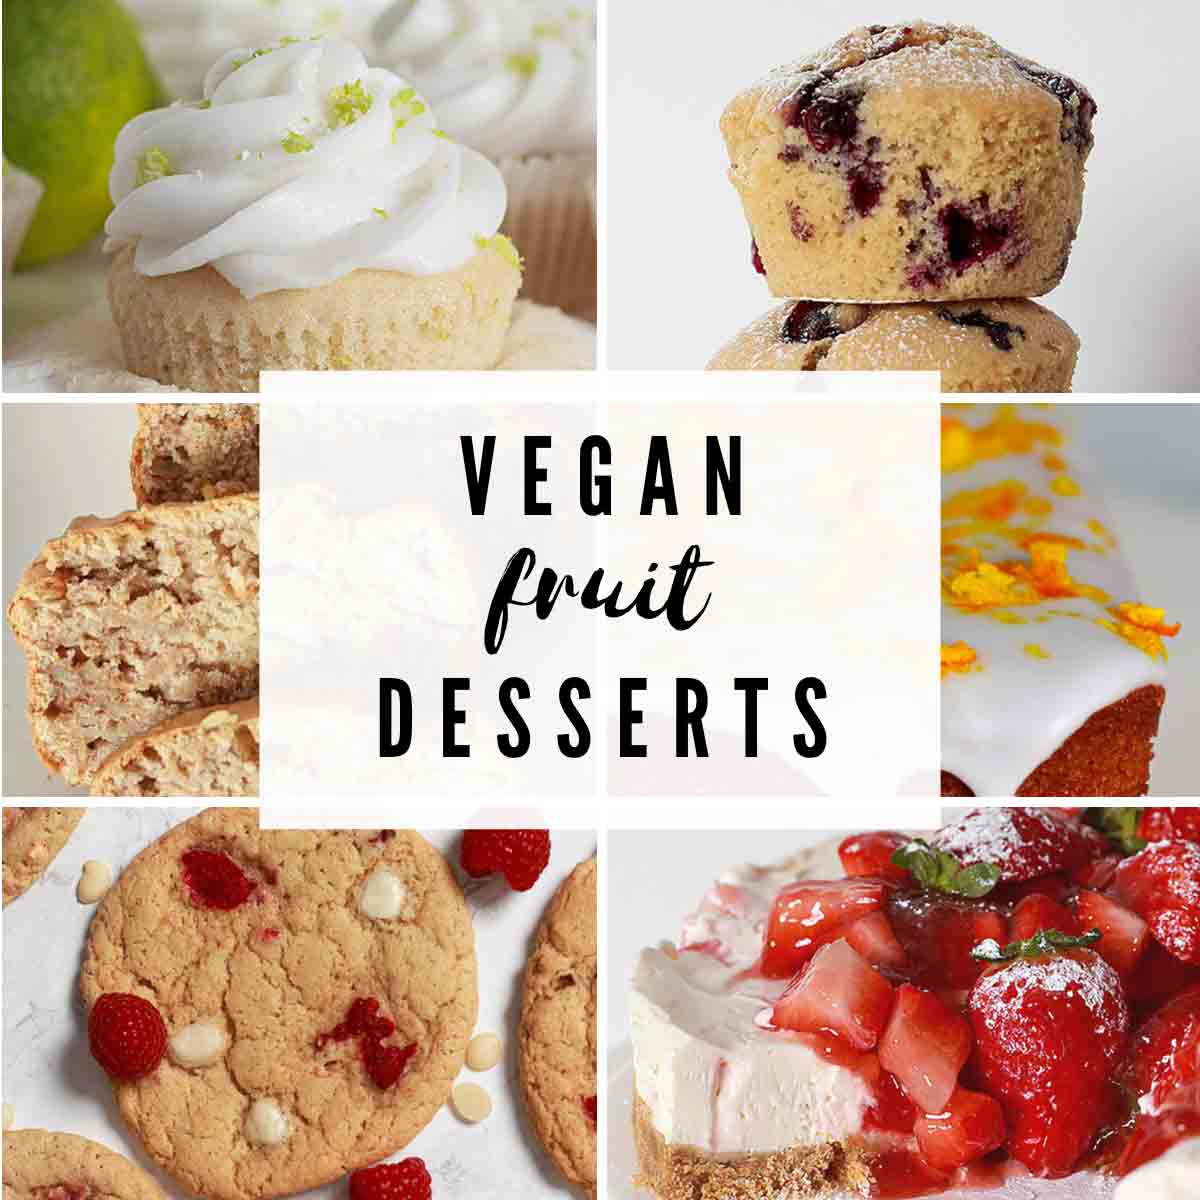 6 Images Of Vegan Fruit Desserts